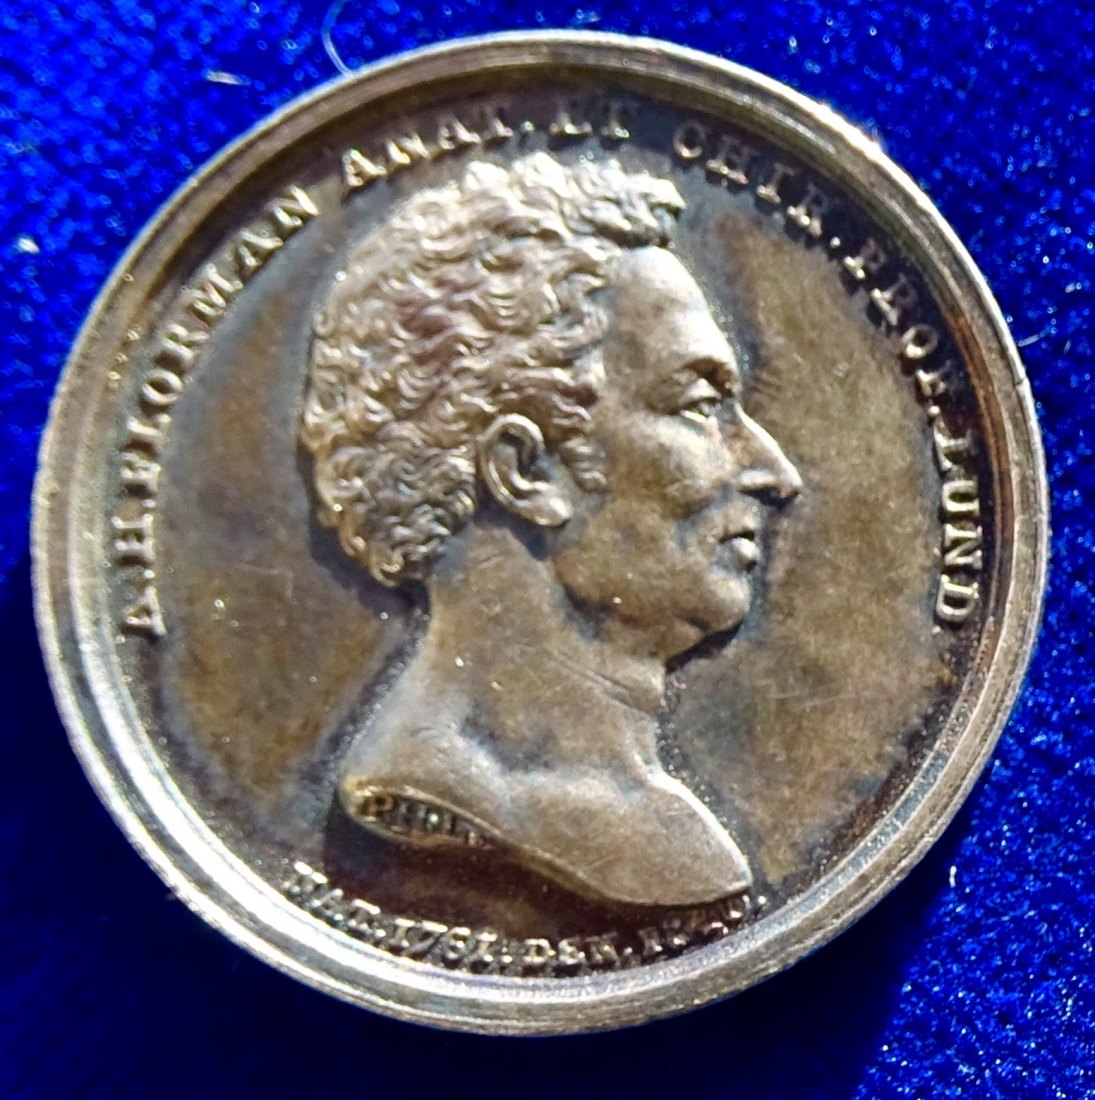  Schwedische Akademie der Wissenschaften 1851 Medaille Medicina in Nummis Arvid Florman   